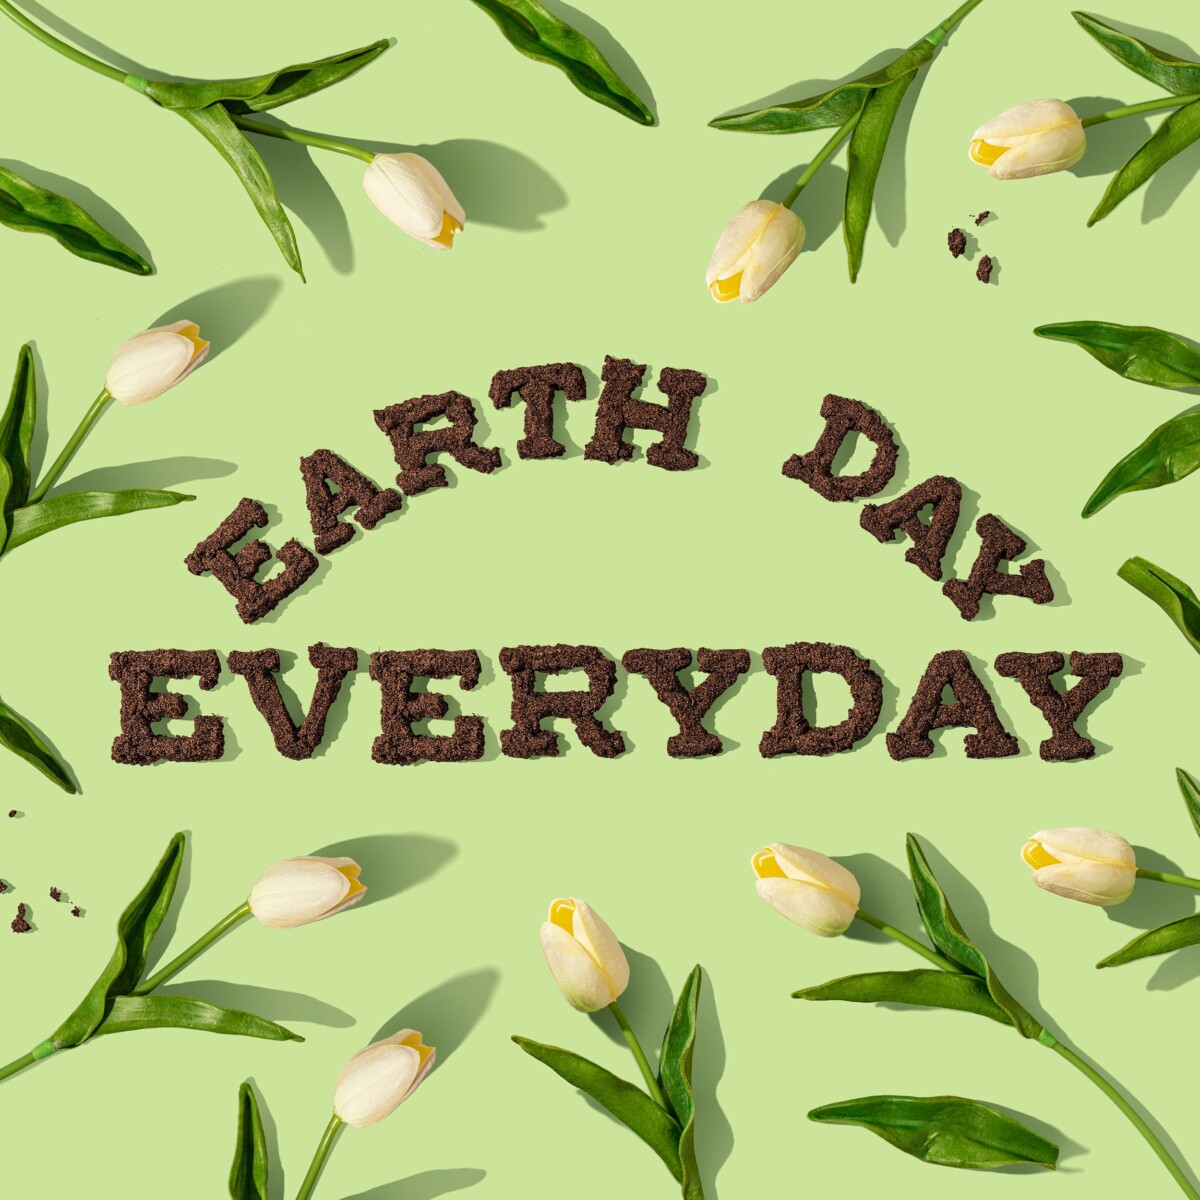 Earth Day Everyday - photo: Amy Shamblen on Unsplash.com